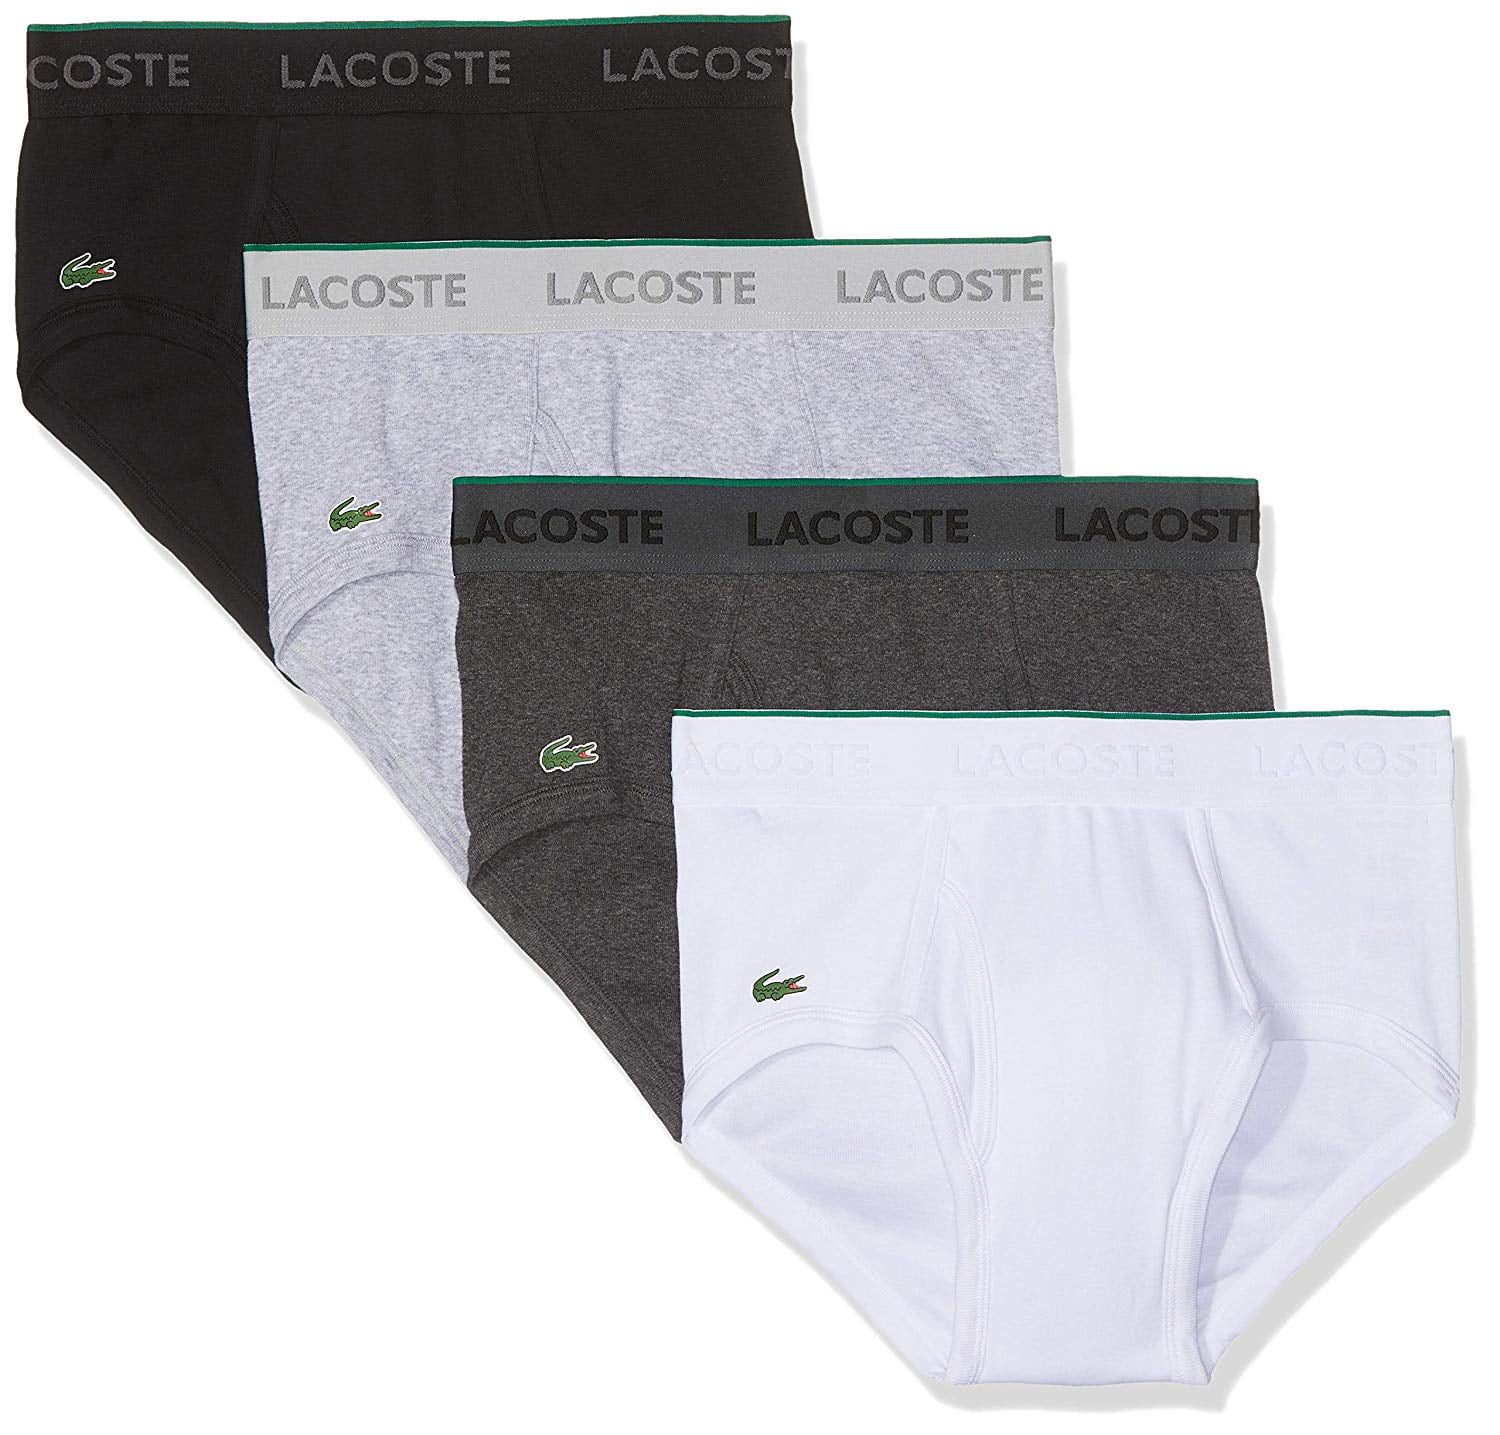 Lacoste Men's Essentials 100% Cotton Underwear Brief, Multipack (Black /  Grey / Charcoal / White, X-Large) 